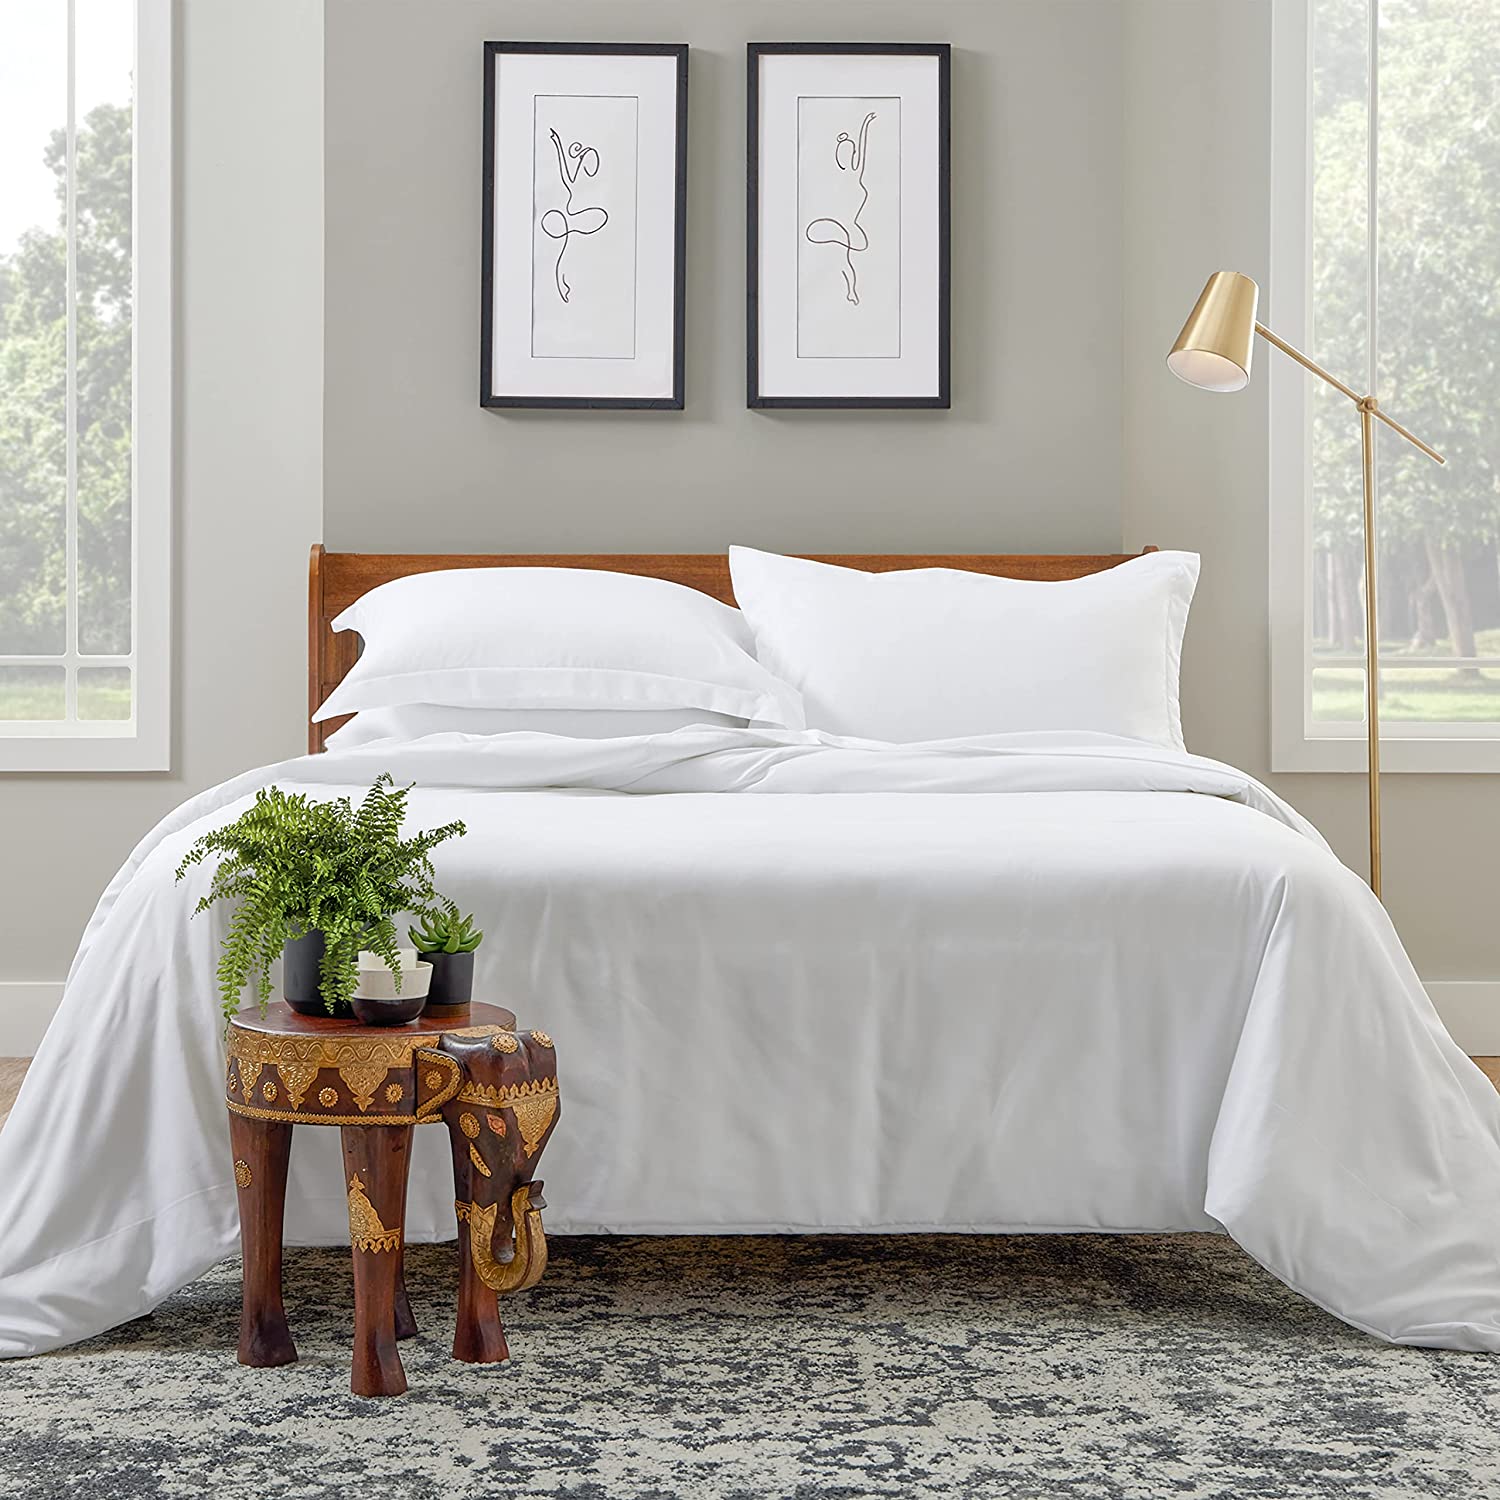 Luxury Duvet Cover Set 3 Piece Blend Ultra Soft Bedding Zippered Comforter Protector 2 කොට්ට ෂැම්ස් ඇතුළත් වේ